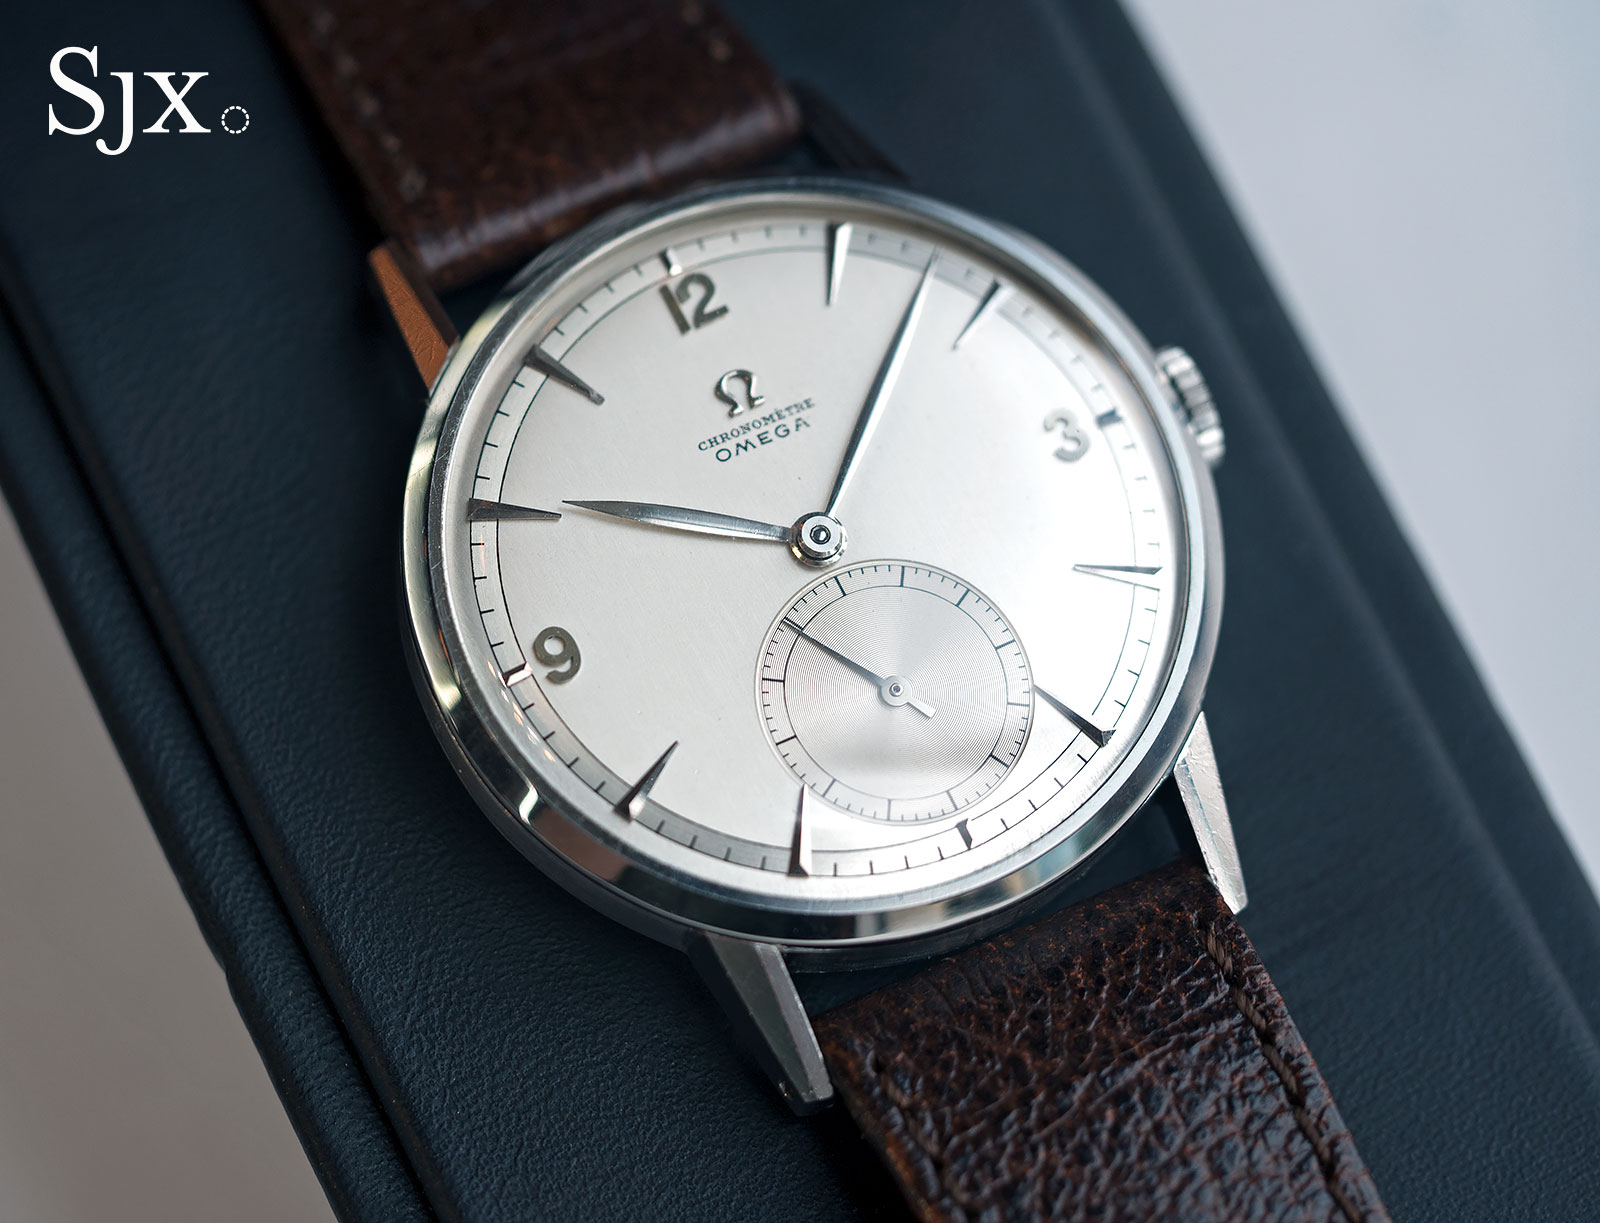 1947 omega watch